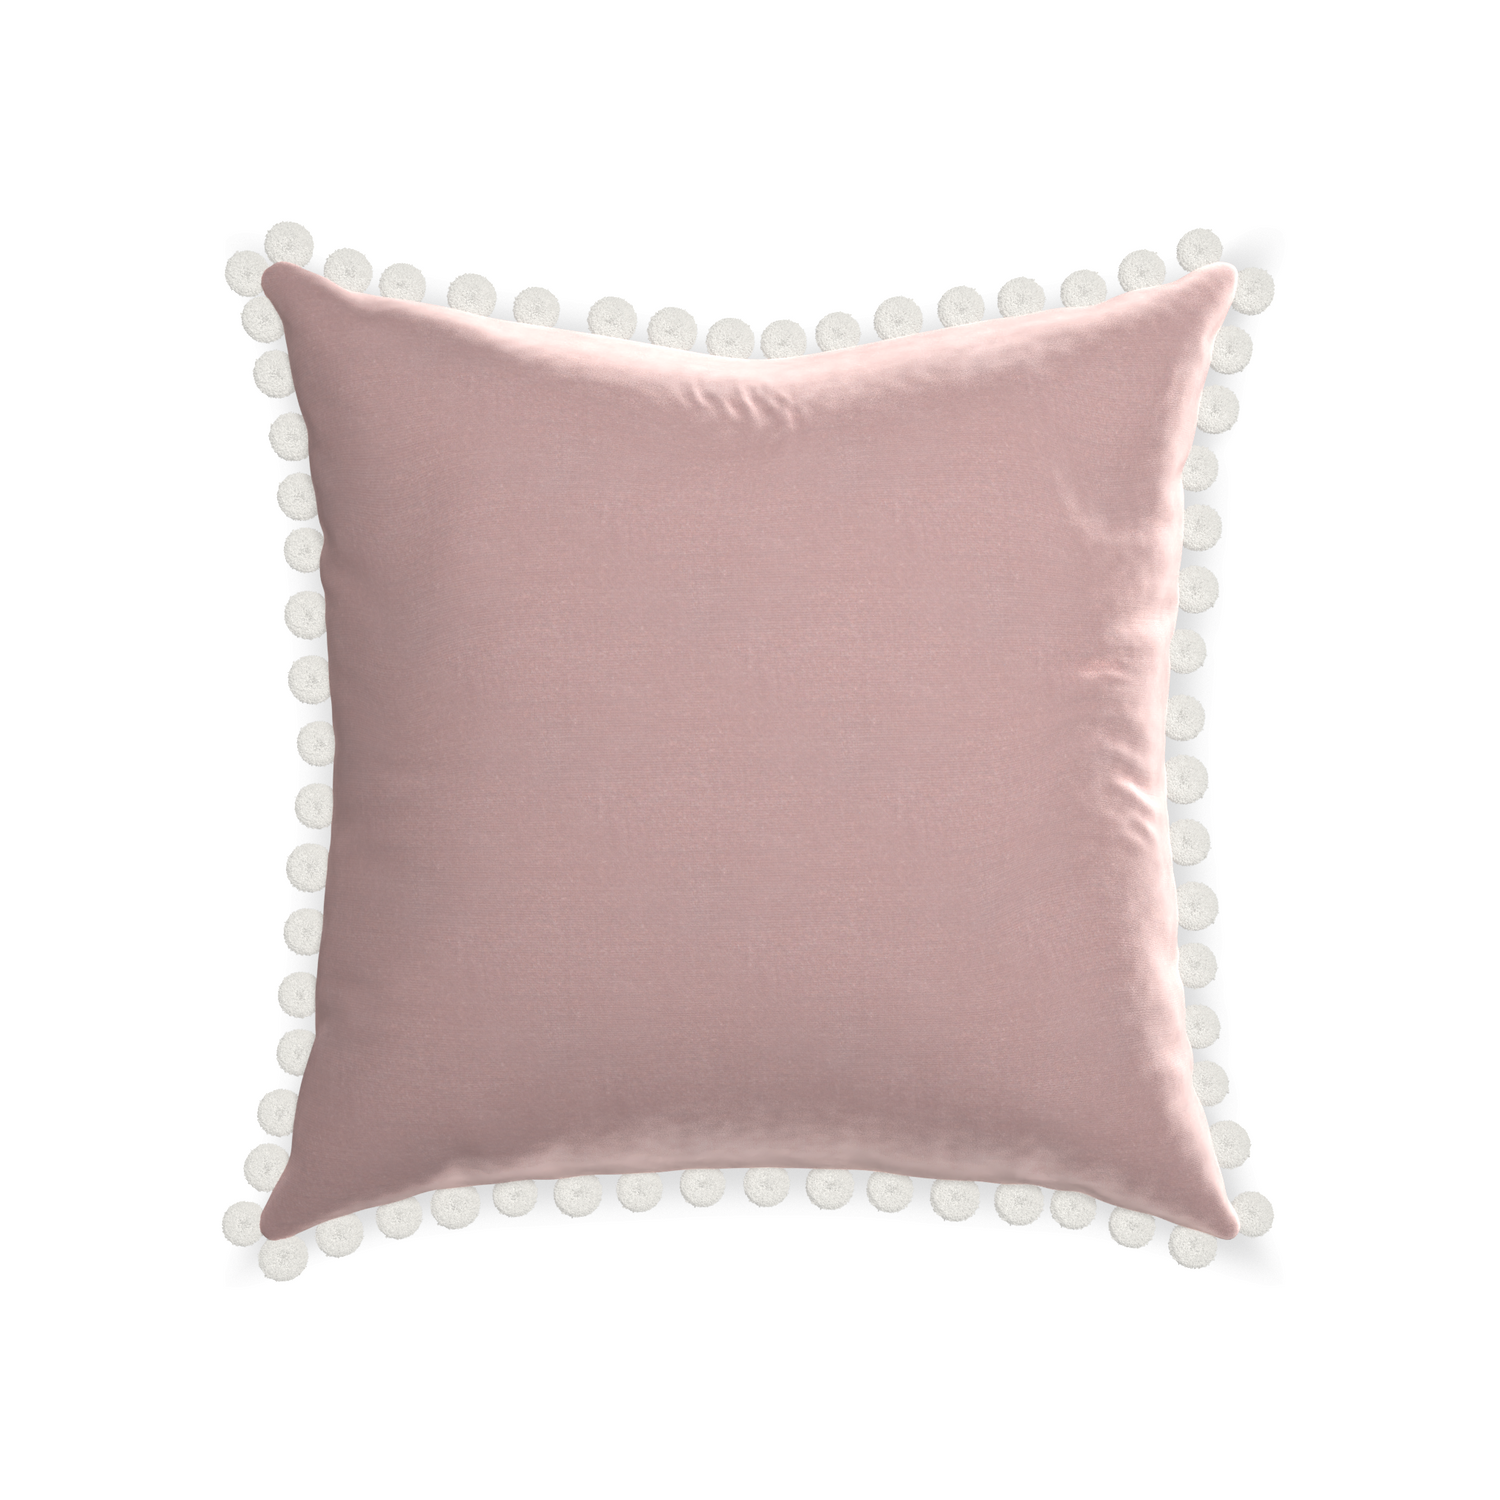 square mauve velvet pillow with white pom poms